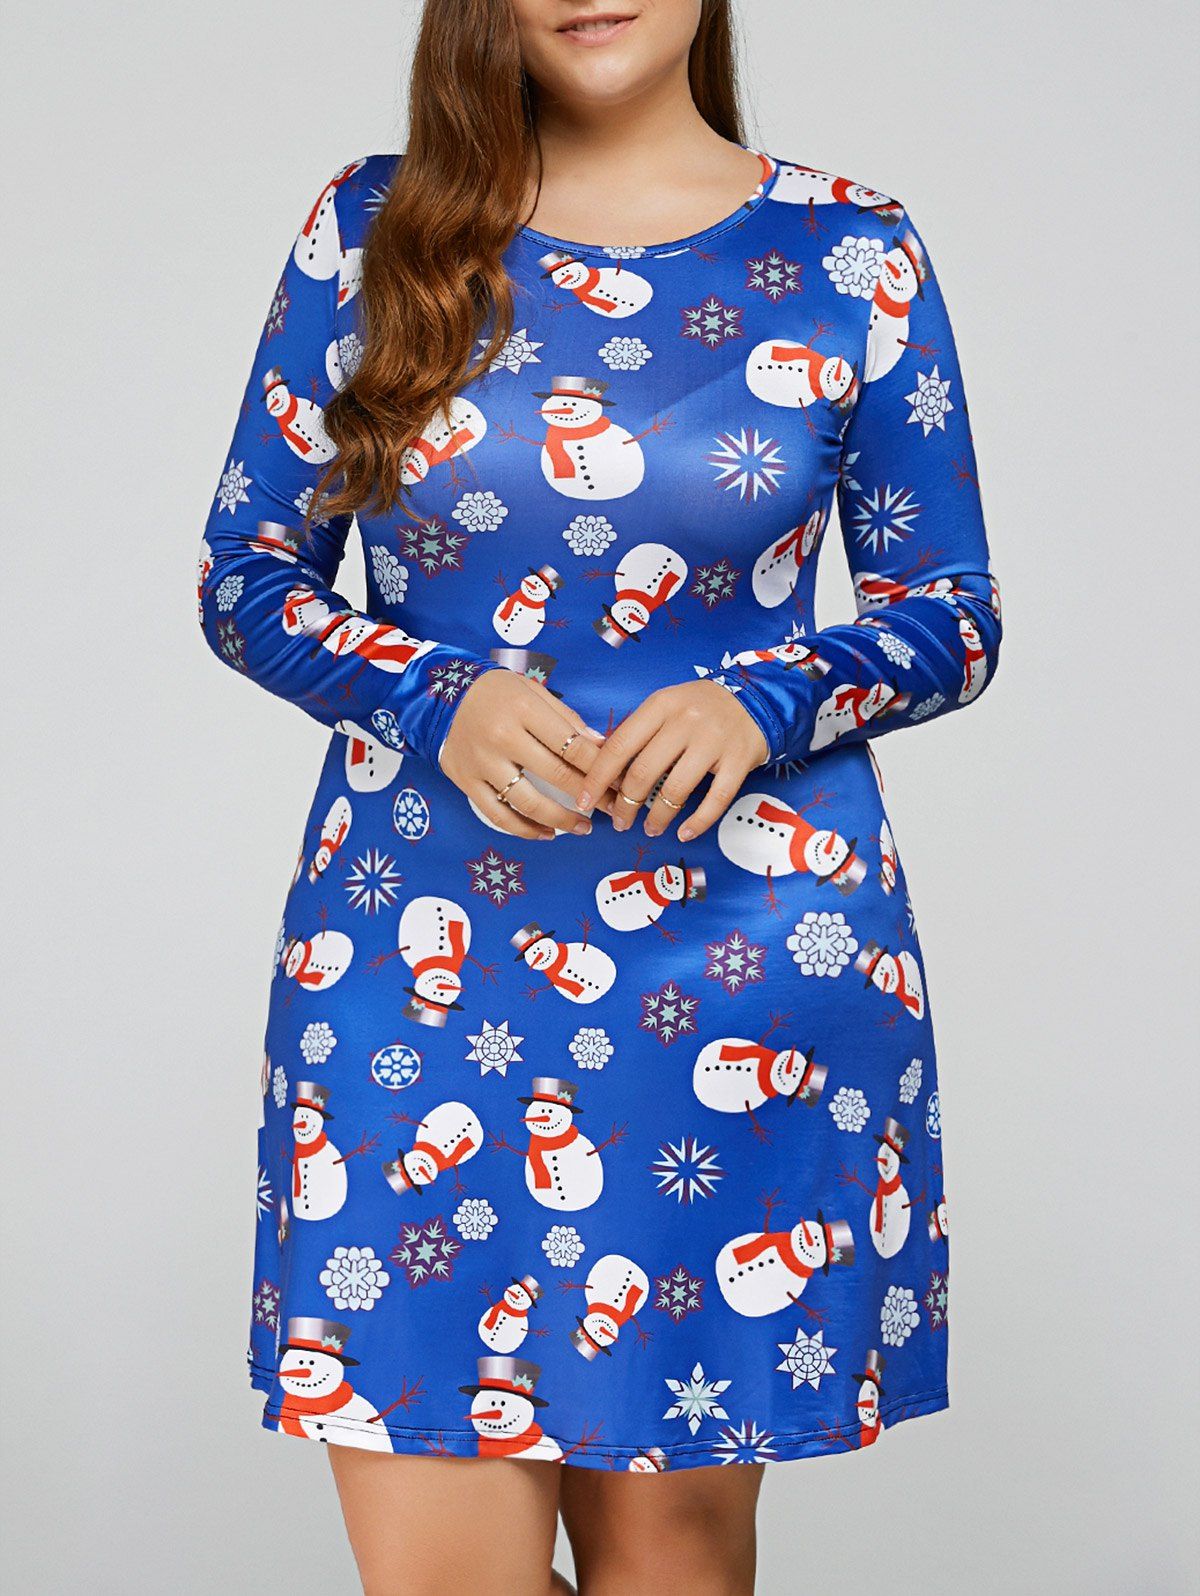 Christmas Snowman Print Long Sleeves Ugly Swing Dress - BLUE M